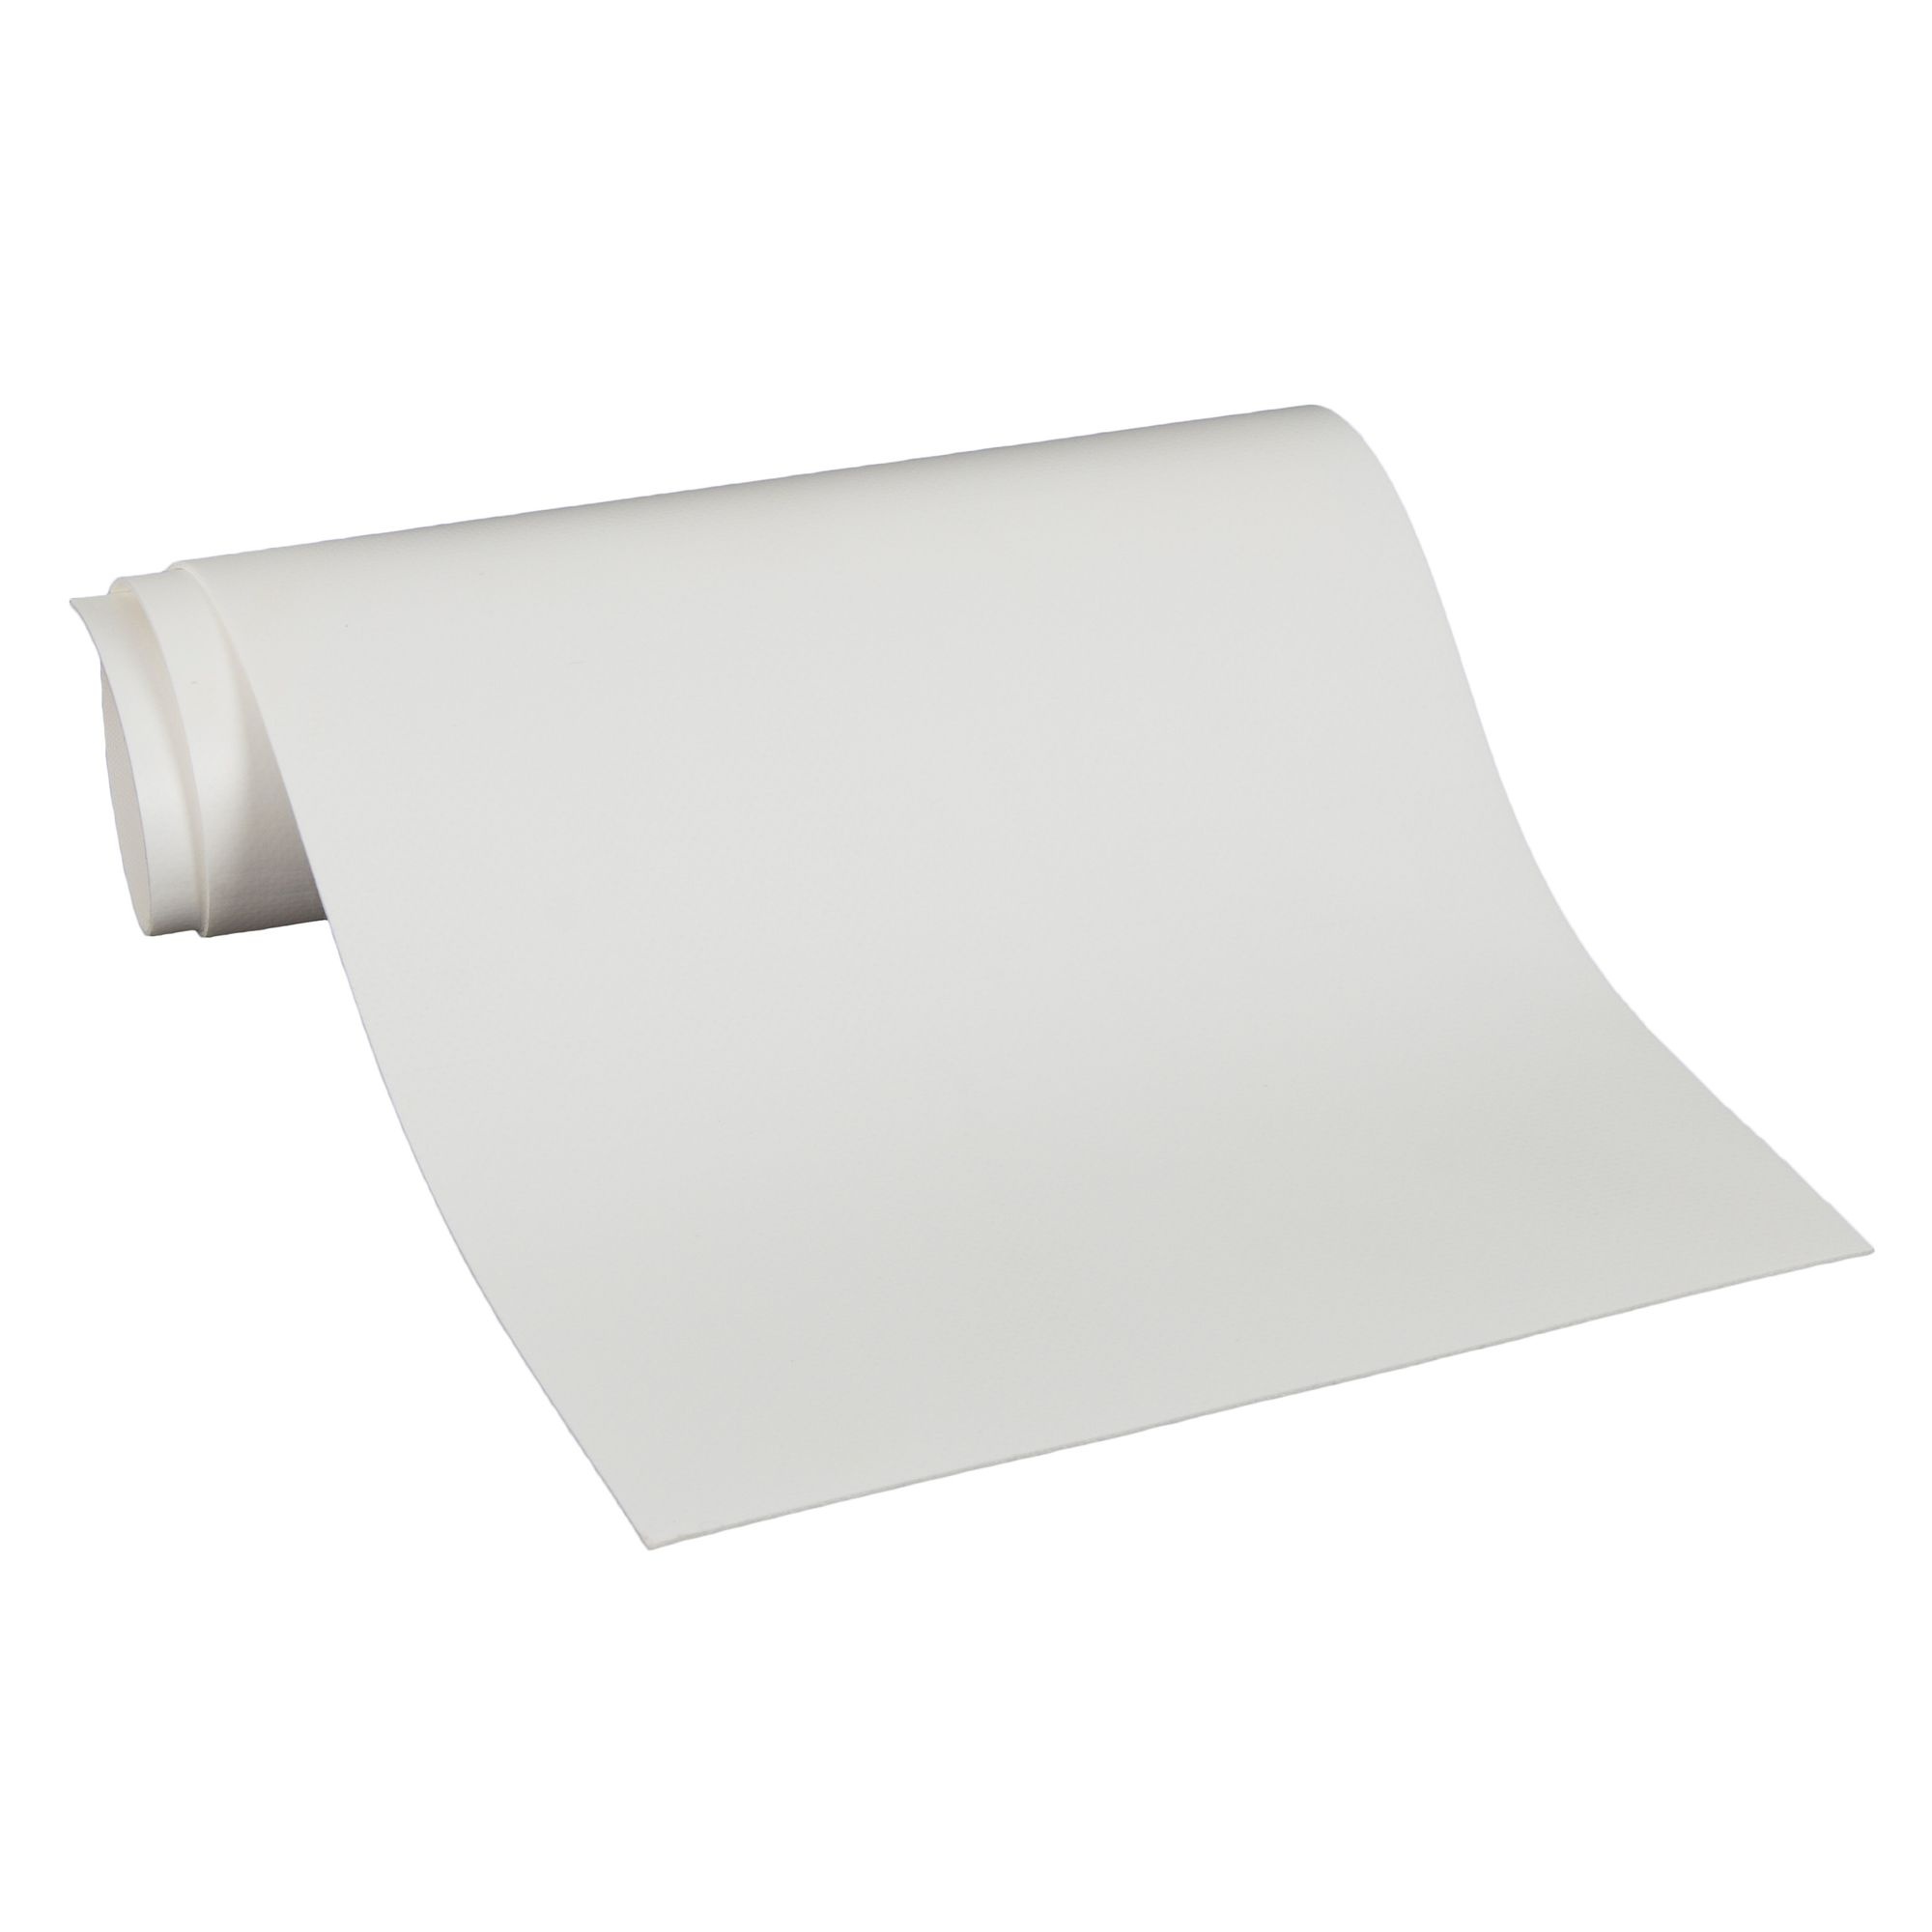 NRS NRS SUP Board PVC Fabric 6"x18" White